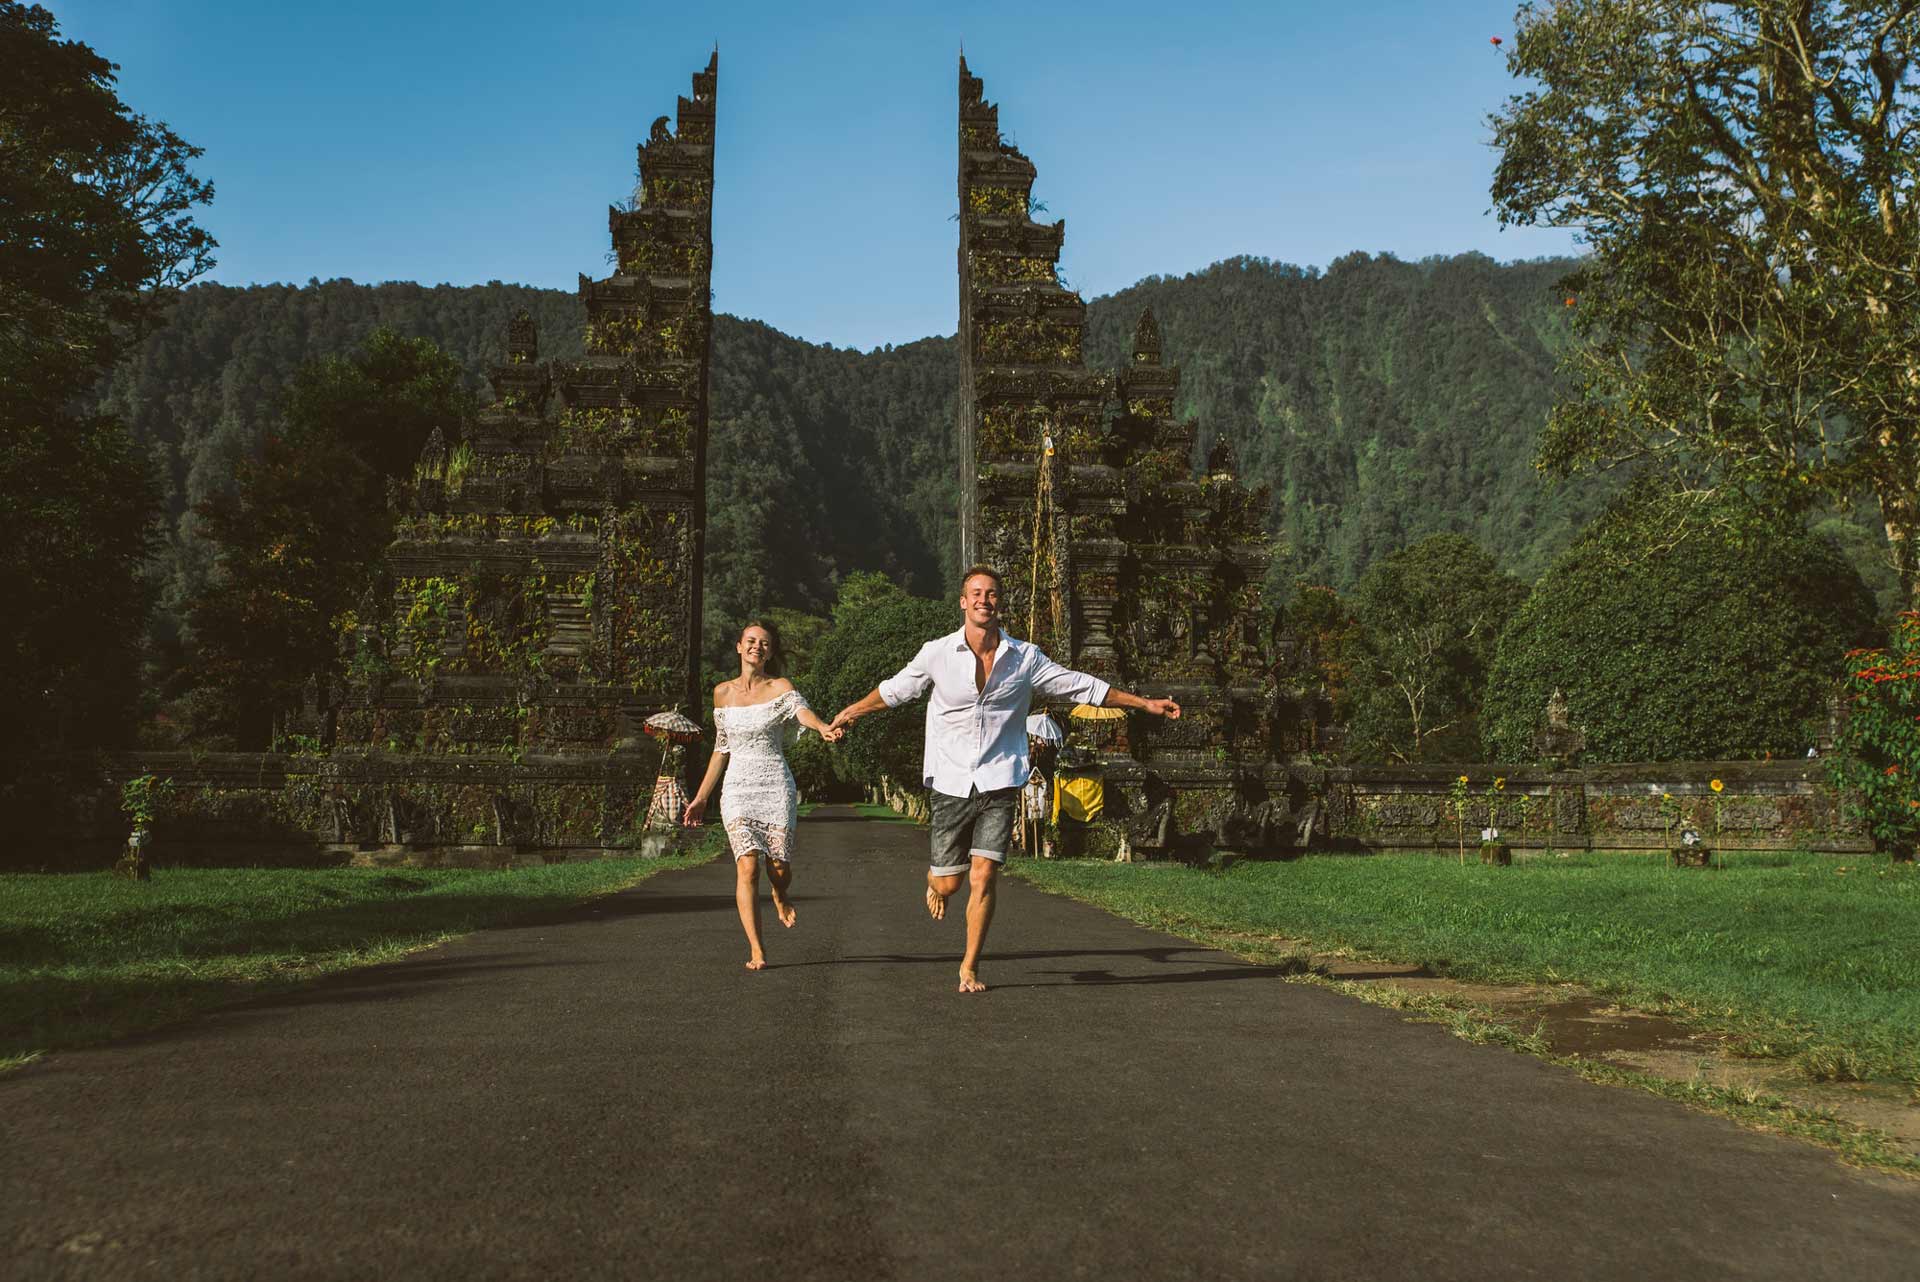 Couple at Handara Gate, Bali